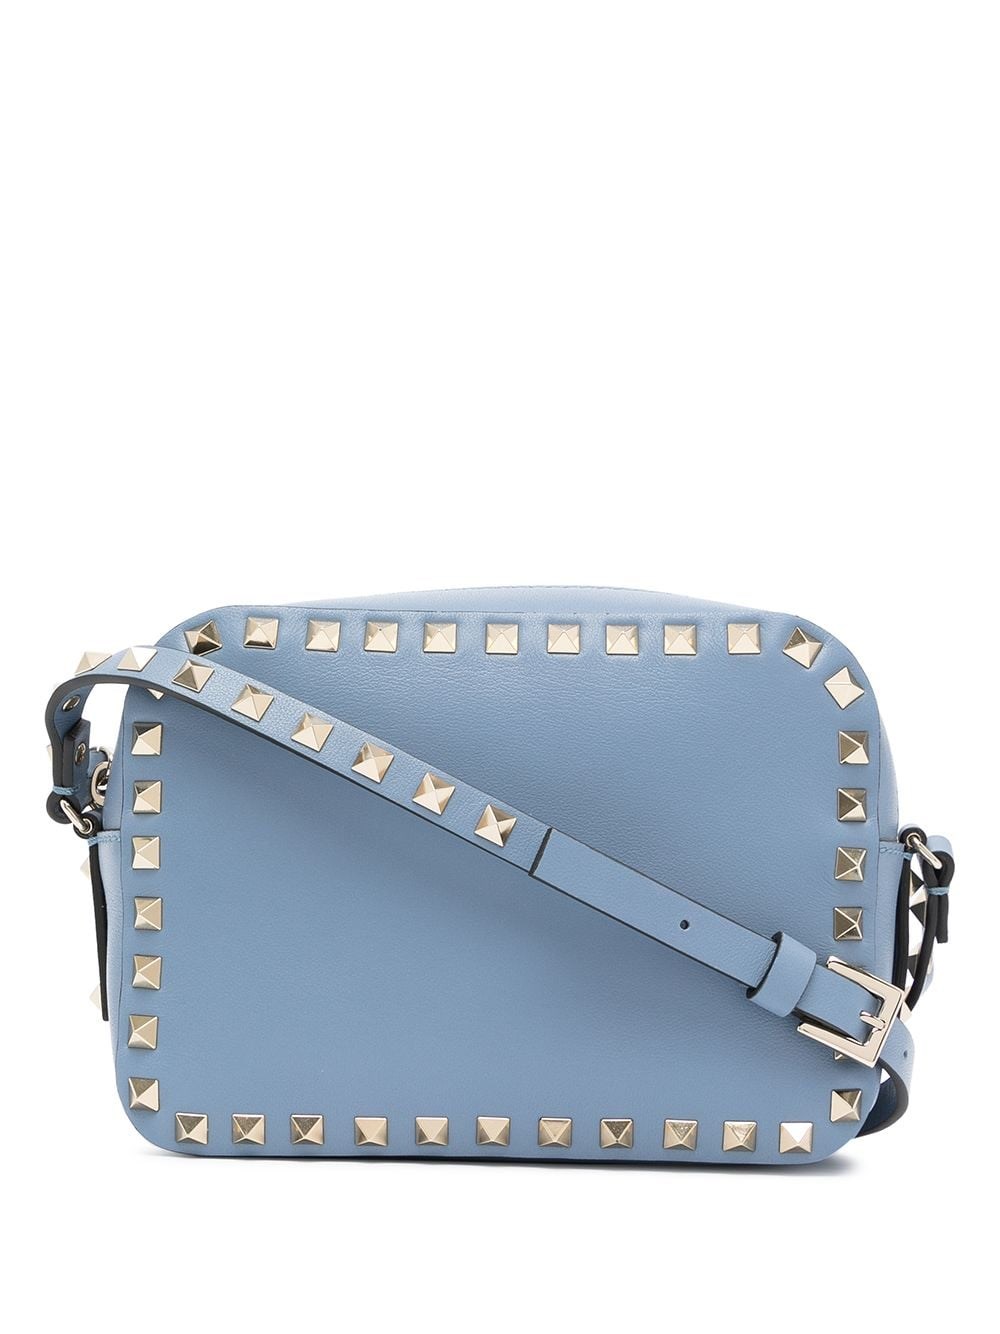 Valentino Garavani Rockstud Cross Body Bag In Blue | ModeSens